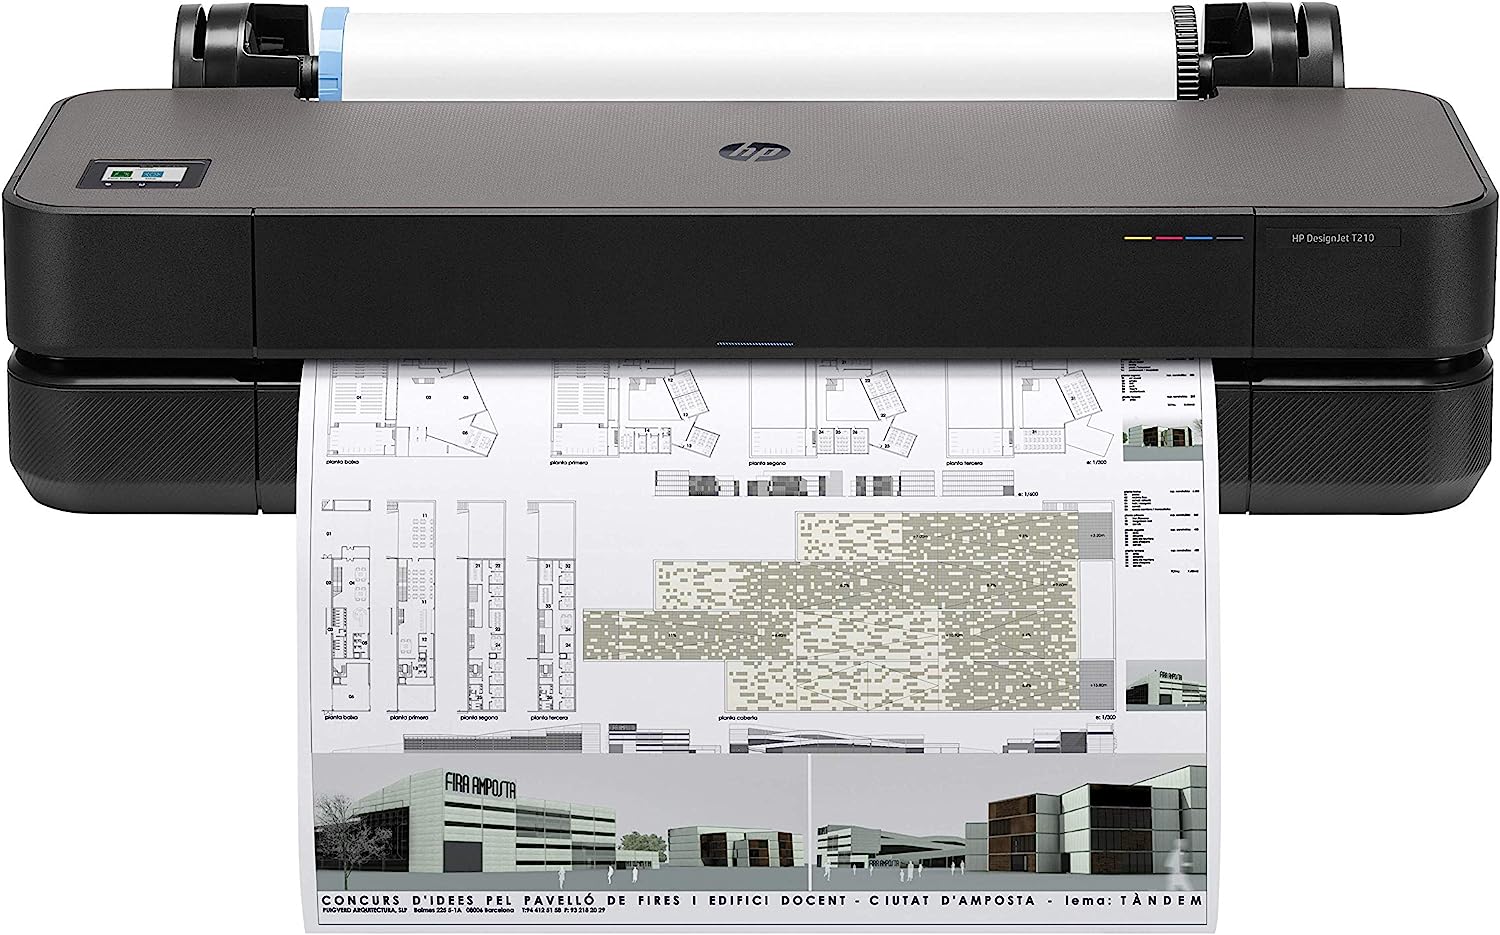 HP DesignJet T210 Large Format 24-inch Plotter [...]